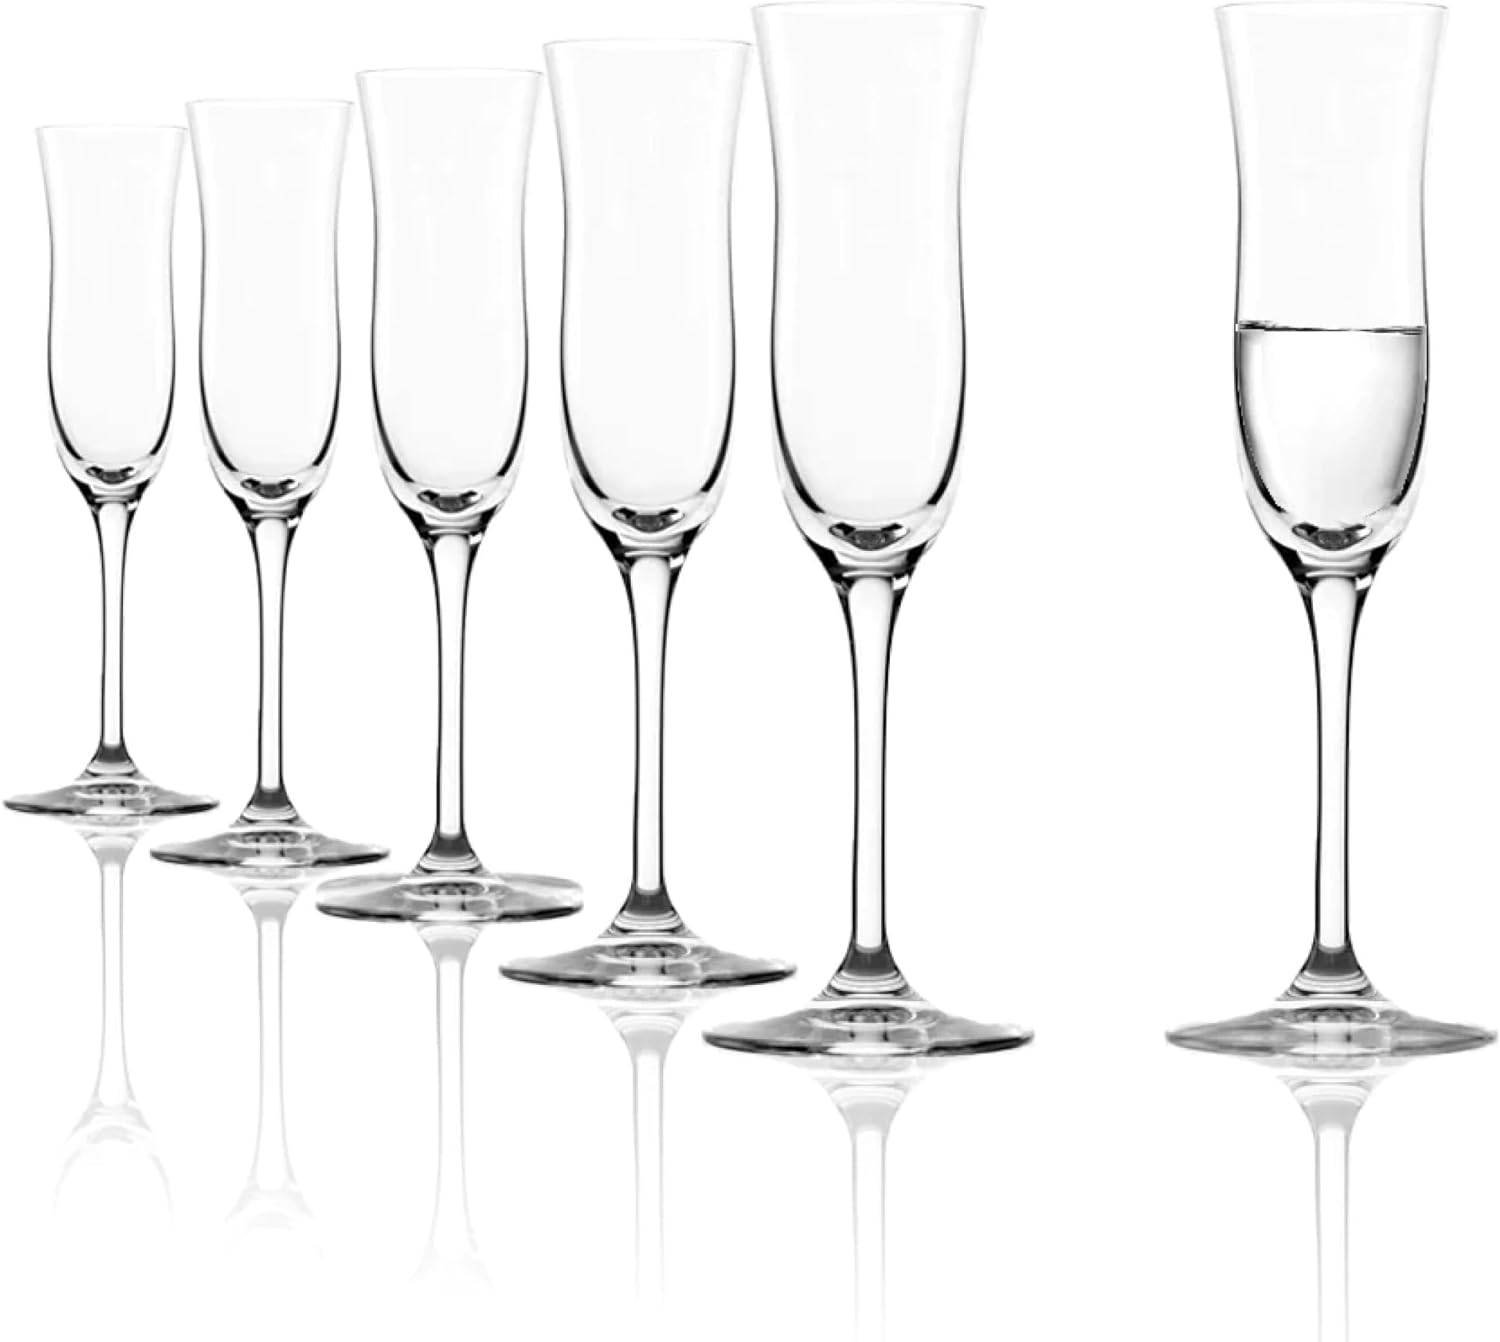 Stölzle Lausitz Classic long-life grappa glass, 100 ml, set of 6, distillate glasses, crystal glass, dishwasher safe, grappa glass, shatterproof, high quality